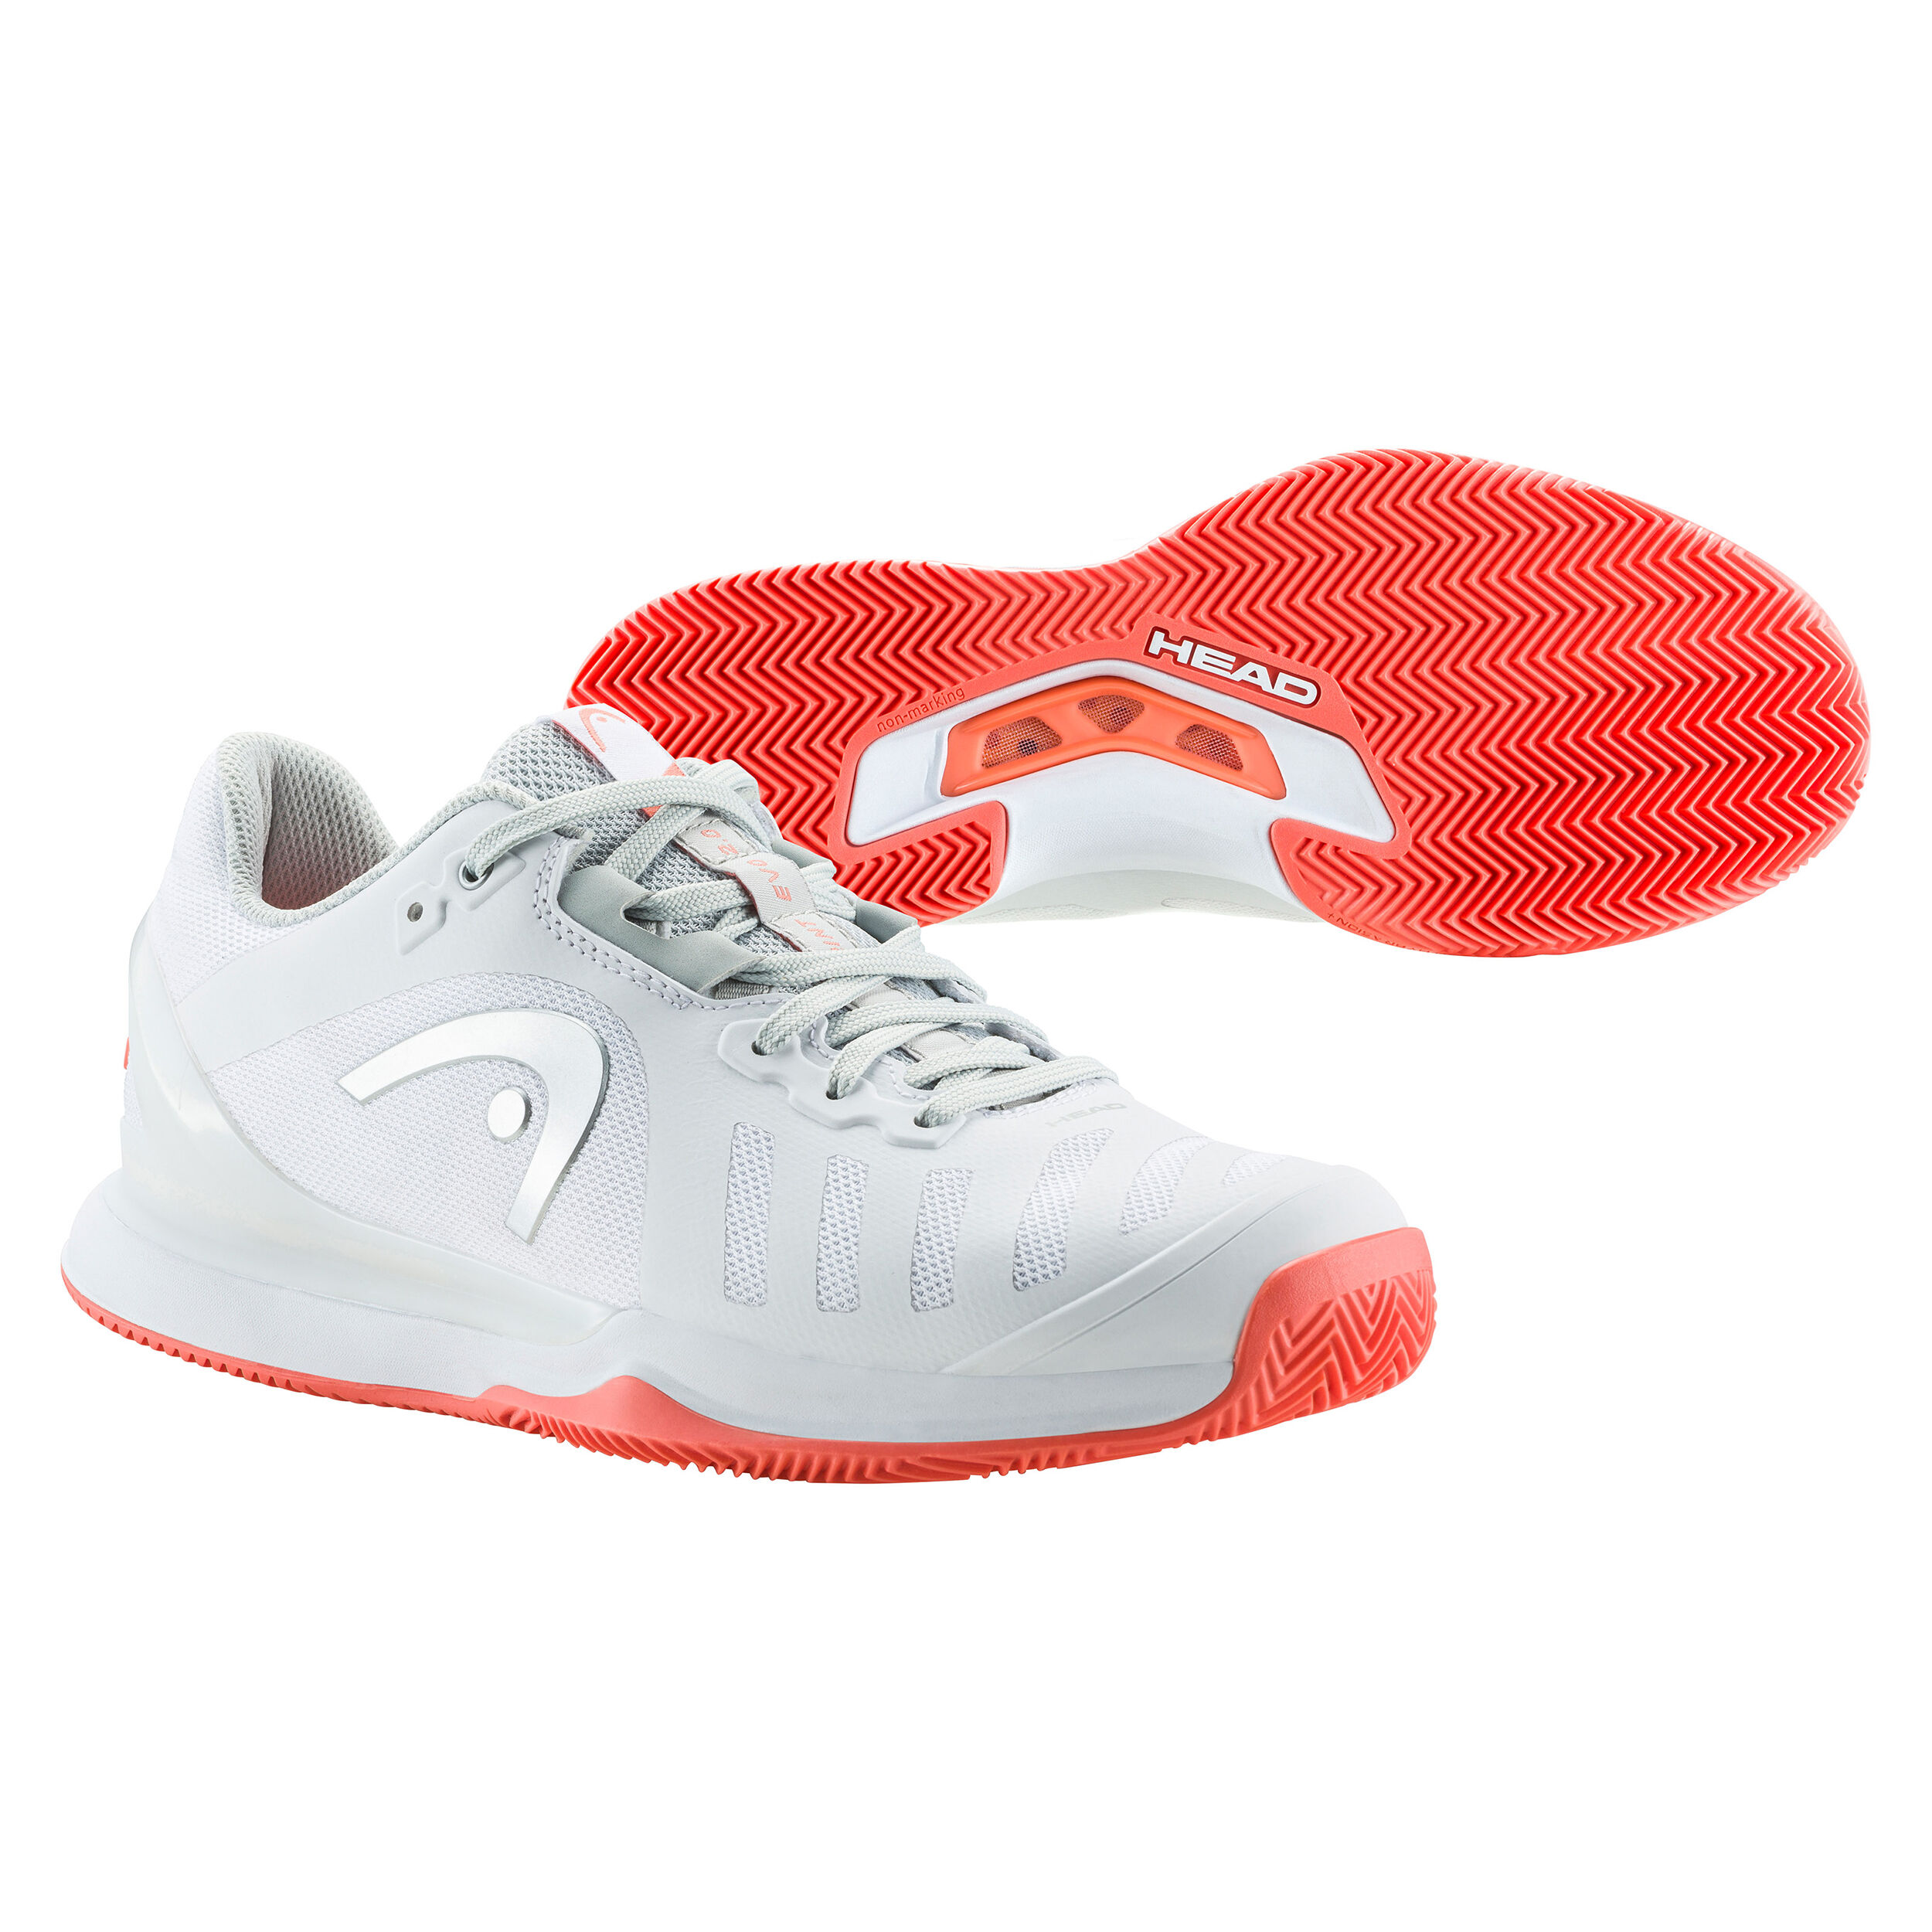 Visiter la boutique HEADHEAD Hommes Sprint Evo 2.0 Clay Chaussures De Tennis Chaussure Terre Battue Noir Orange 